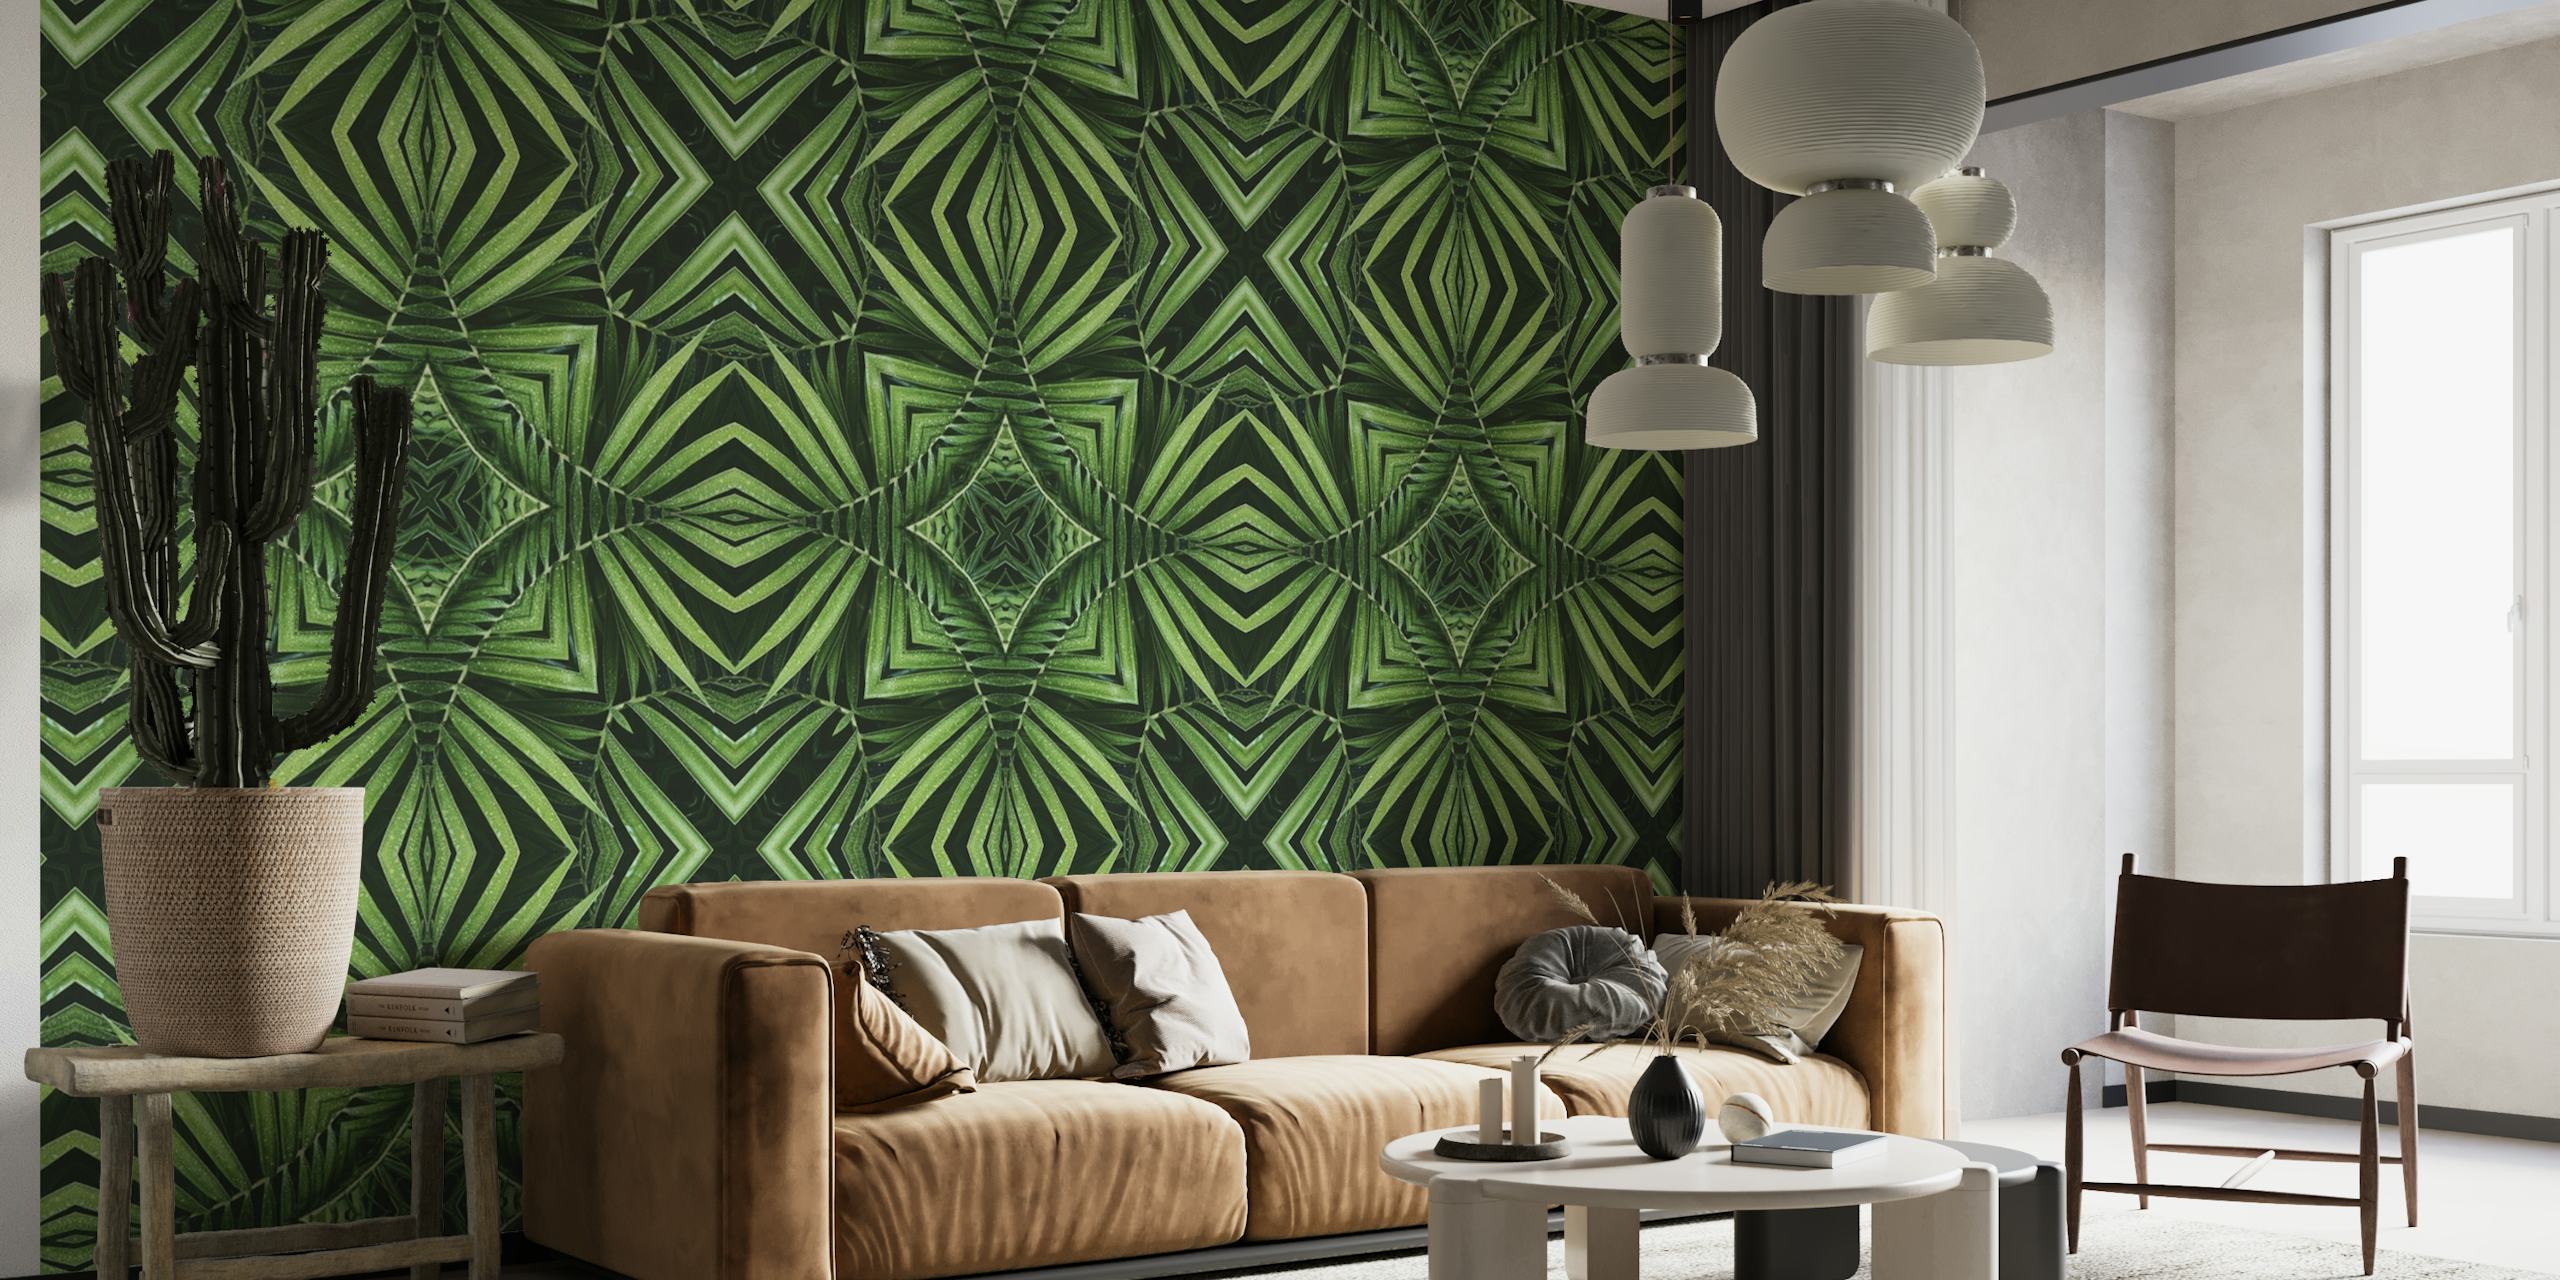 Tropical Green Jungle Tile pattern wall mural